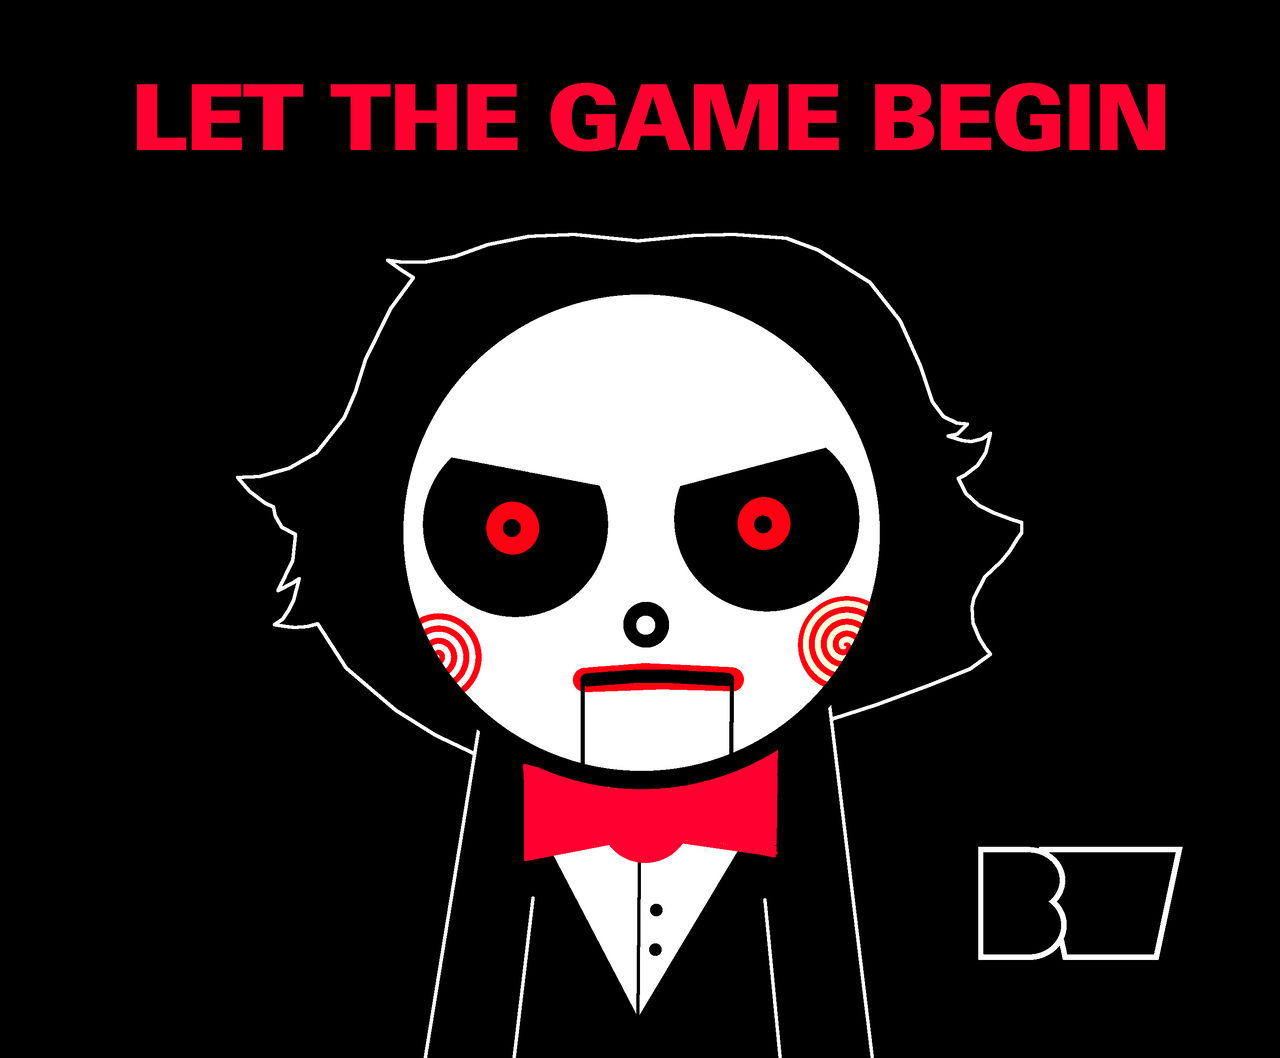 Let The Games Begin! by 00747 on DeviantArt